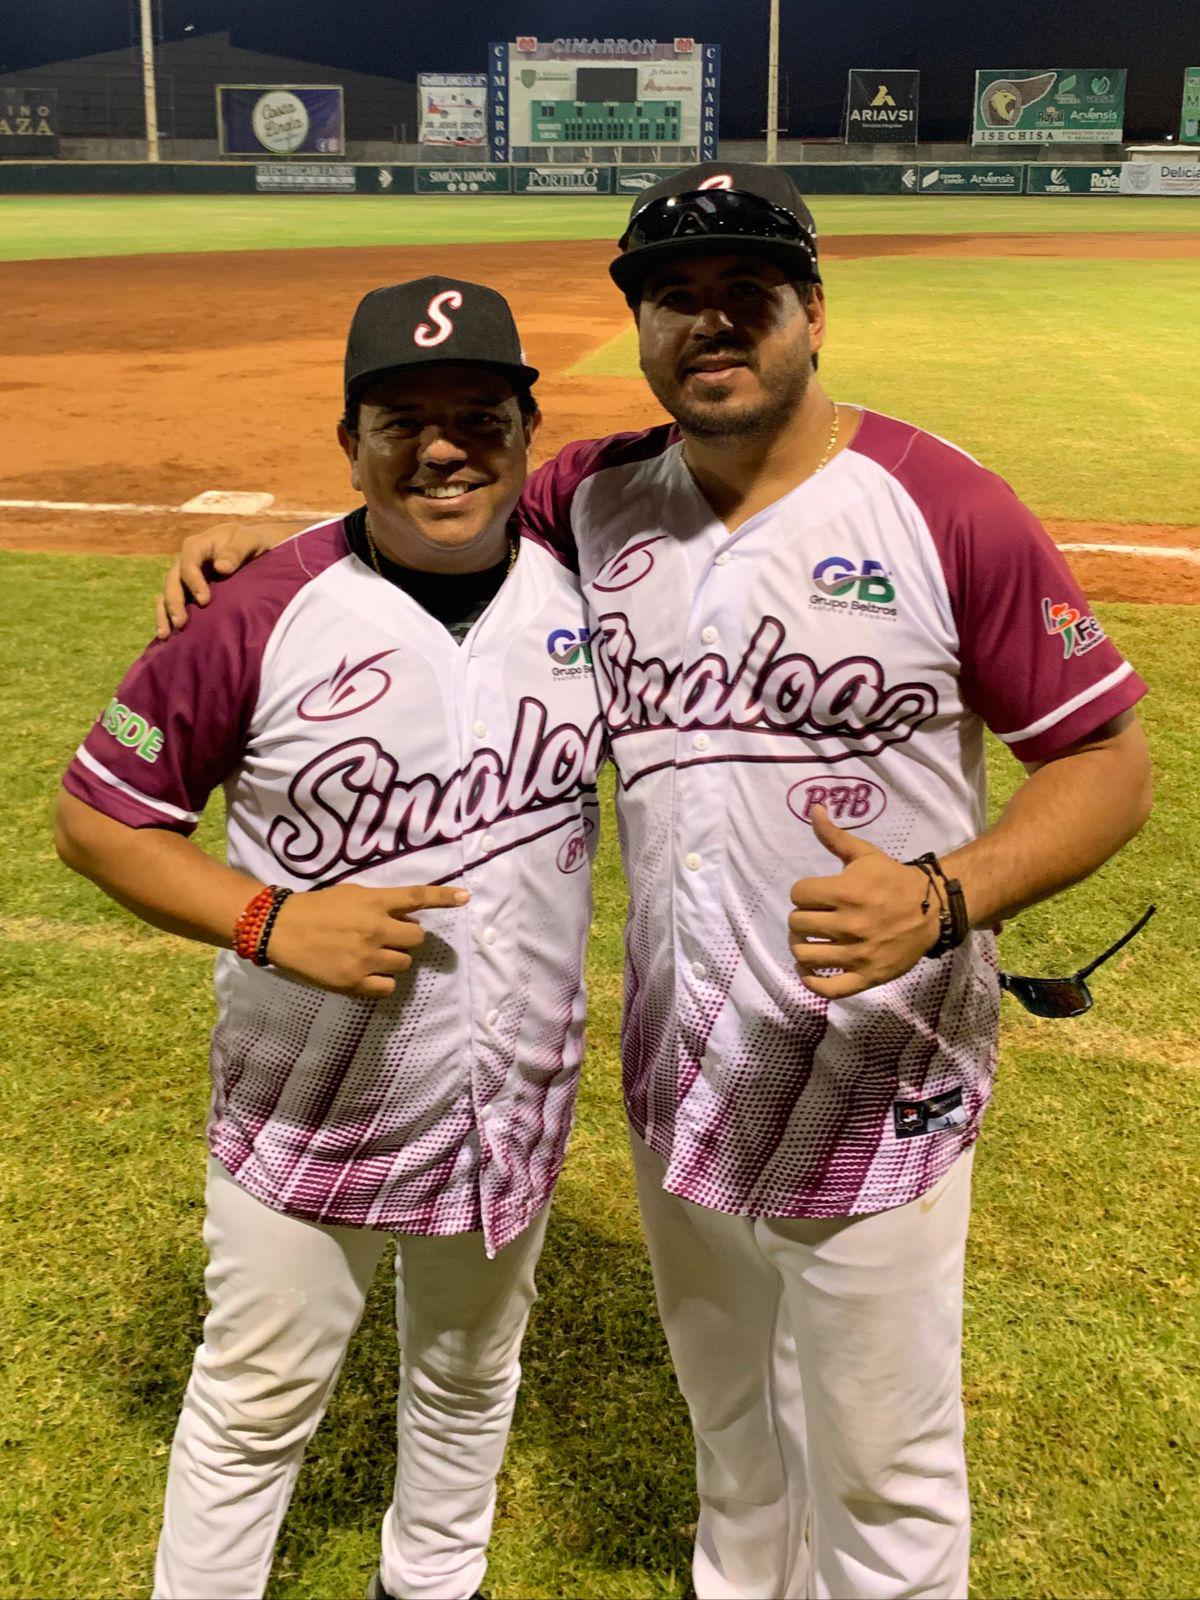 $!Culmina Sinaloa con destacada actuación en Nacional de Beisbol de Primera Fuerza, en Chihuahua